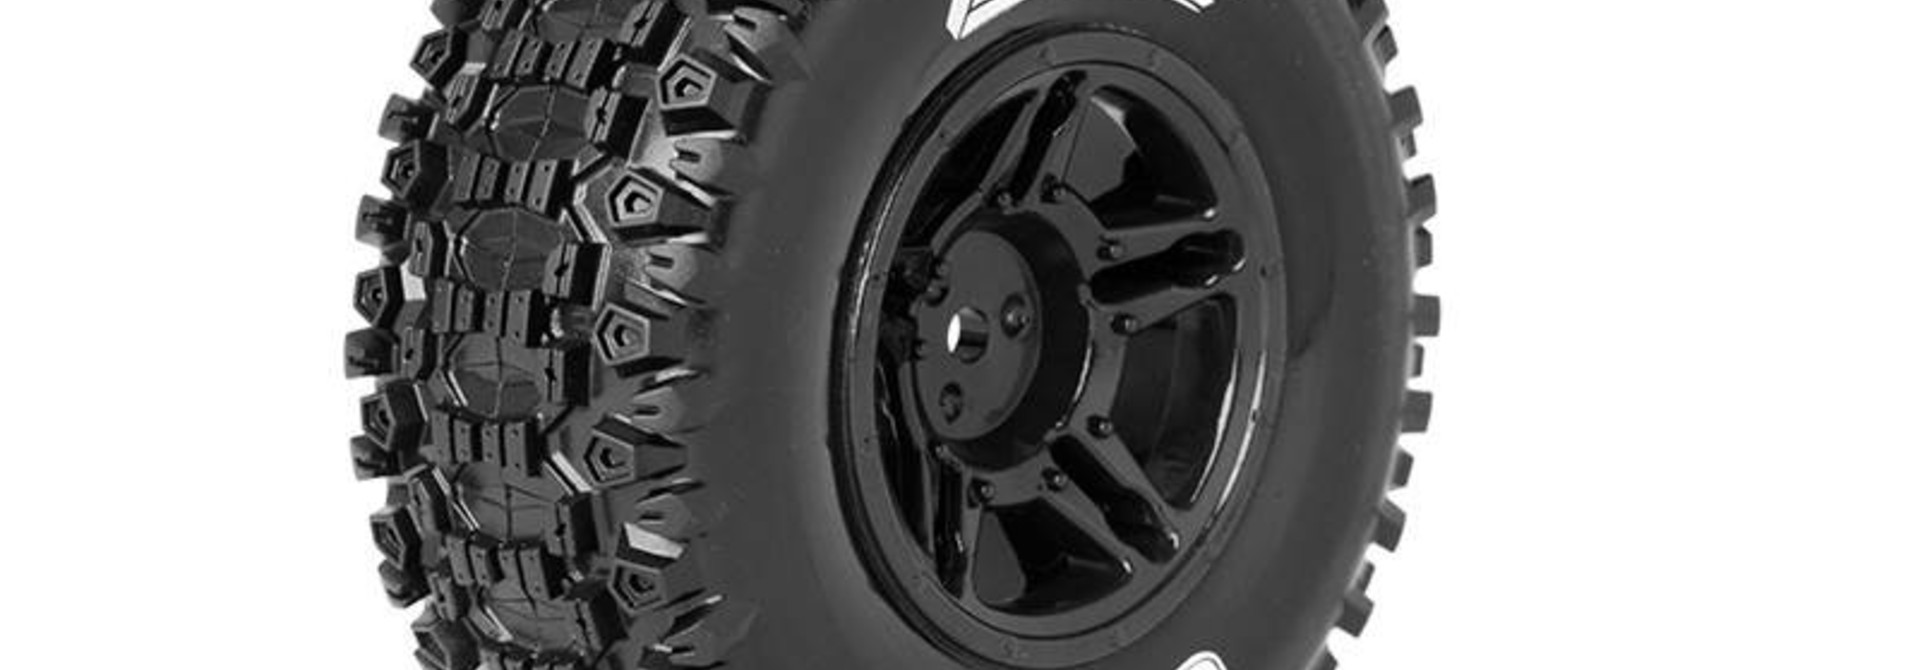 Louise RC - SC-UPHILL - 1-10 Short Course Tire Set - Mounted - Soft - Black Rims - Hex 12mm - SLASH 2WD Rear - SLASH 4X4 F/R - L-T3223SBTR